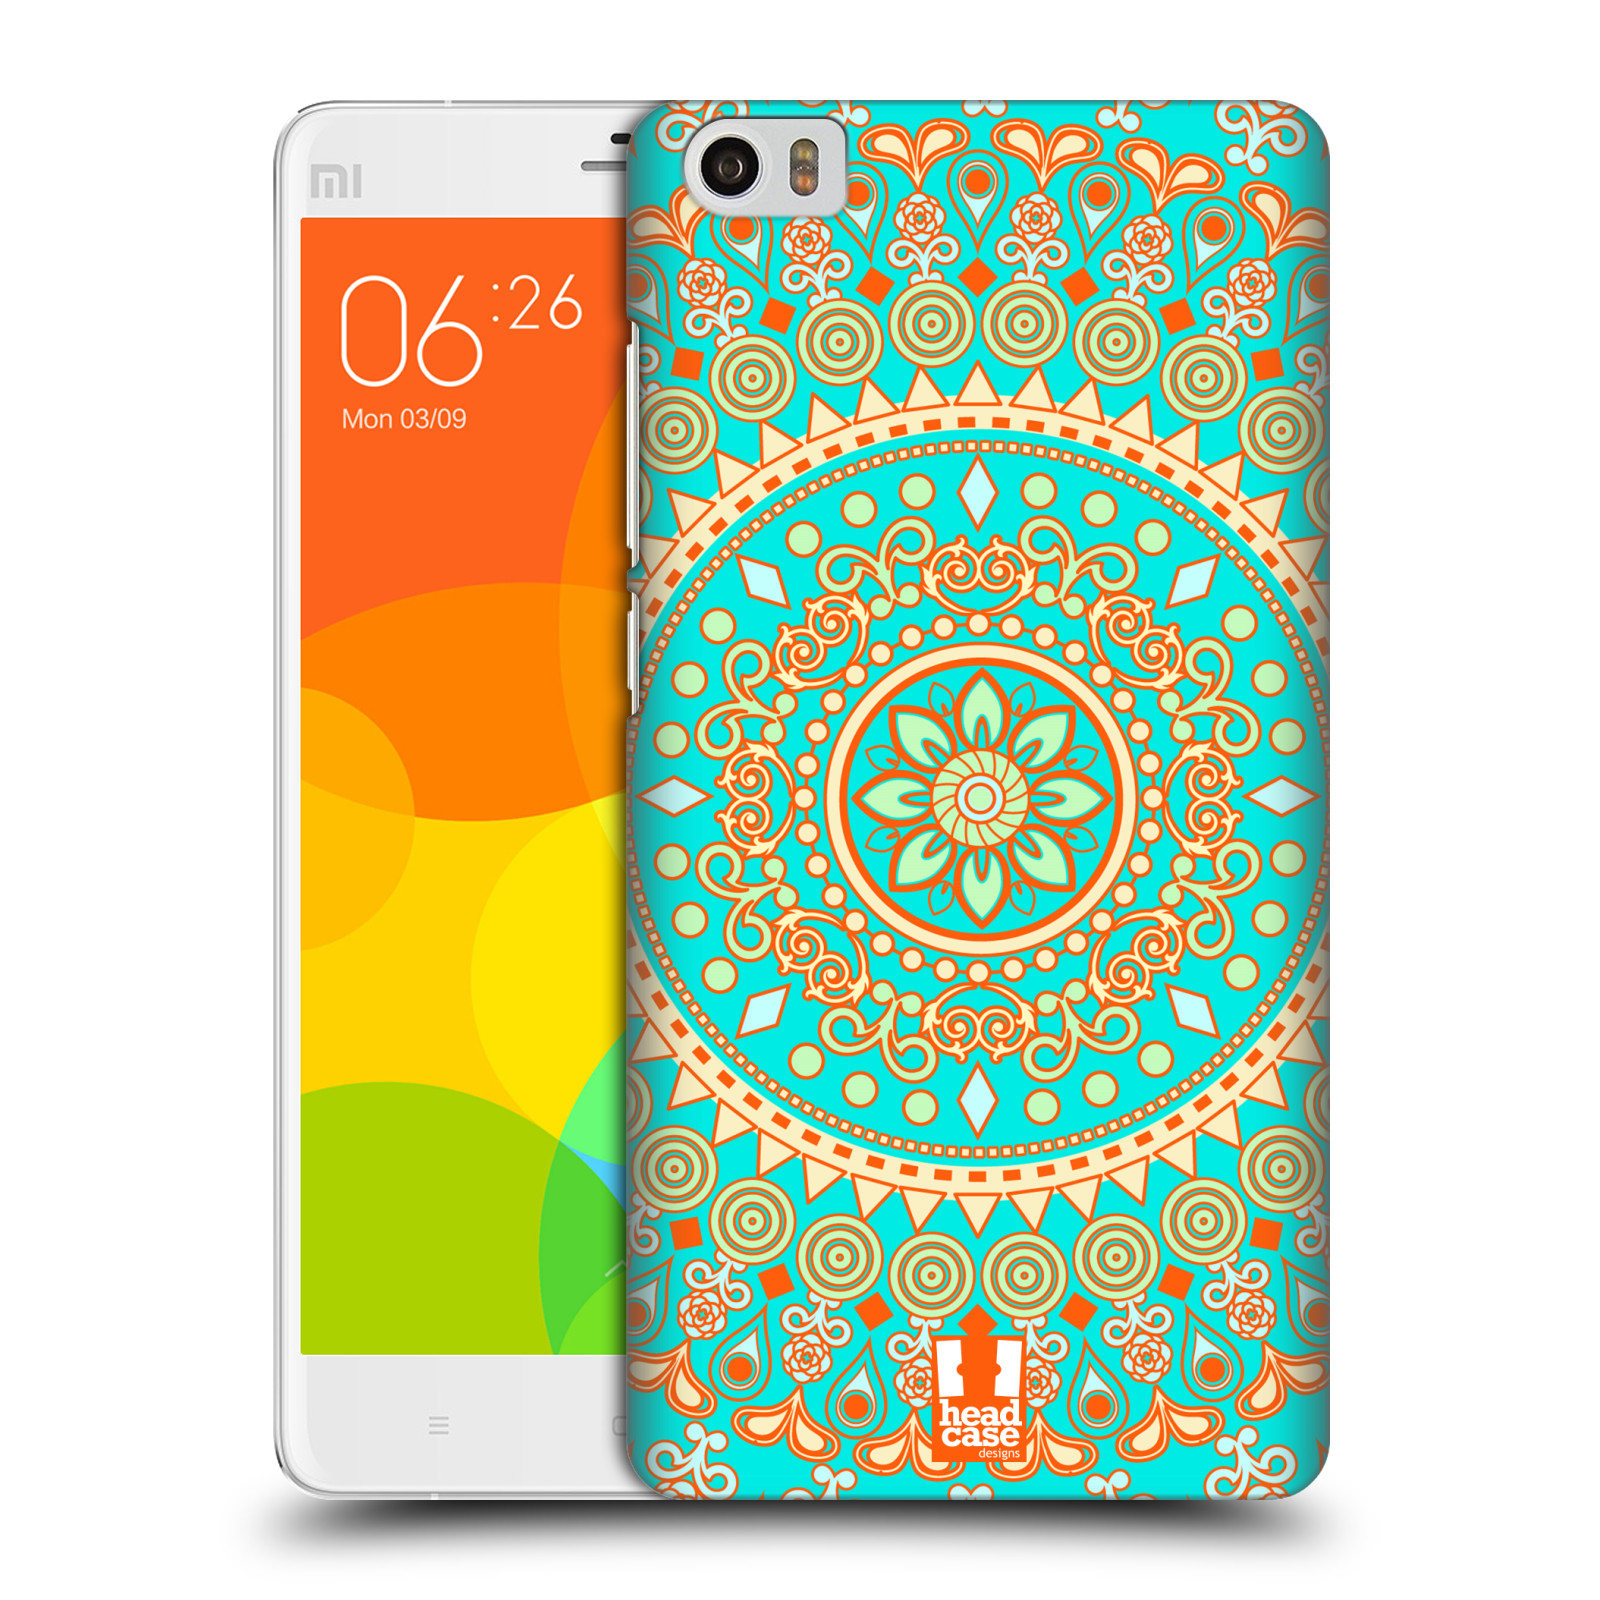 HEAD CASE pevný plastový obal na mobil XIAOMI Mi Note vzor Indie Mandala slunce barevný motiv TYRKYSOVÁ, ZELENÁ